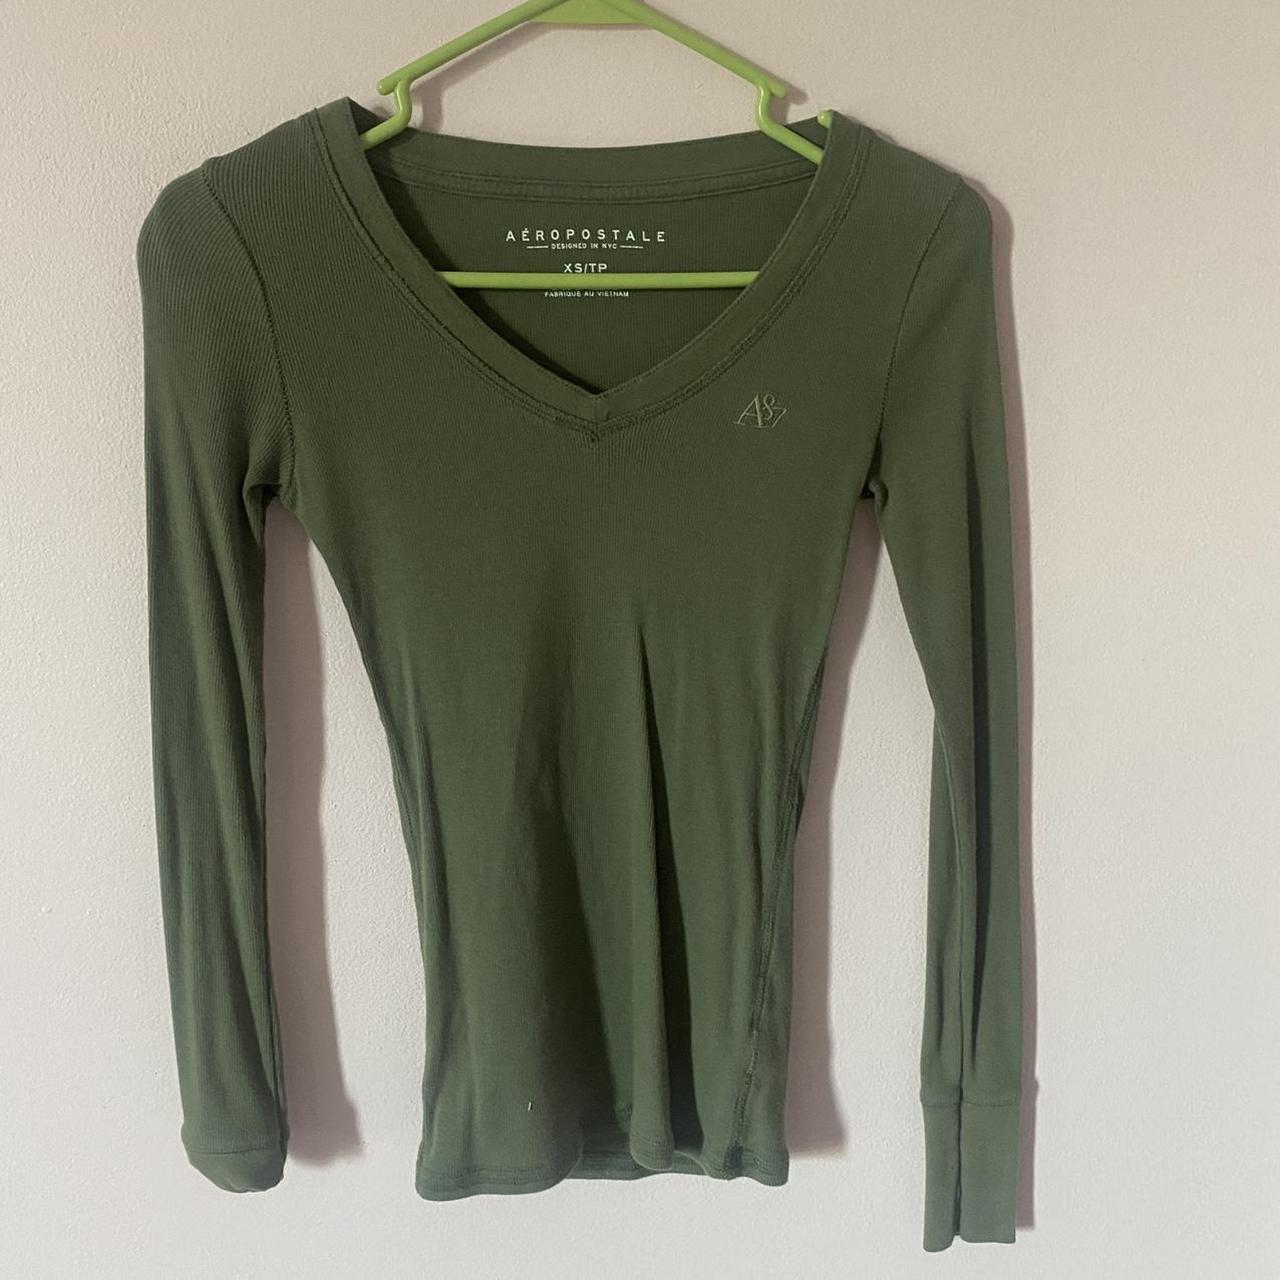 Aeropostale Women's Green and Khaki Shirt (2)